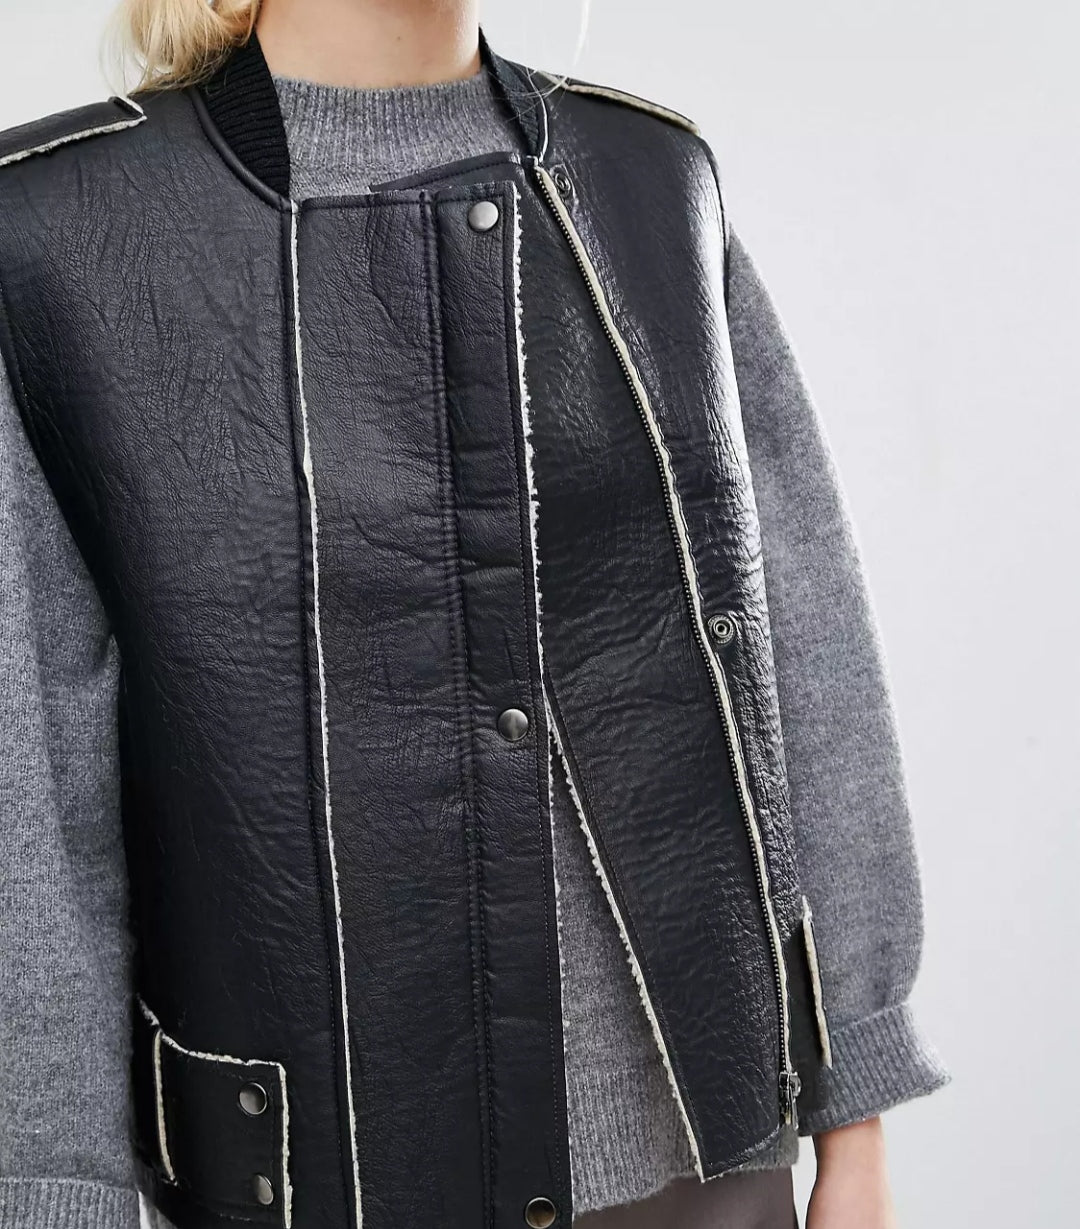 Women's Black Shearling Leather Vest